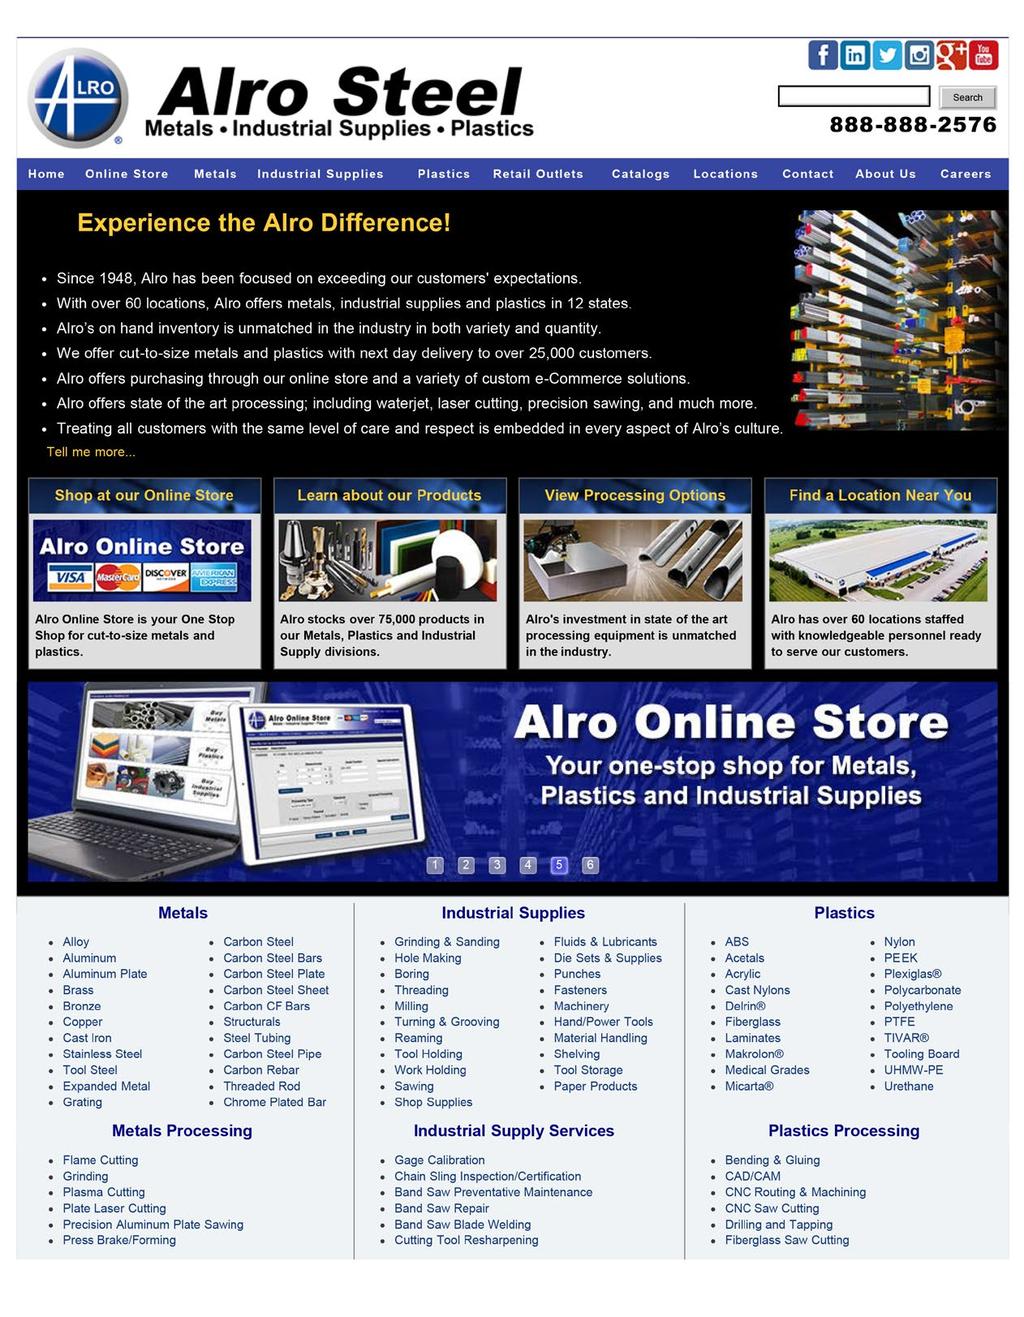 Visit the Alro Web